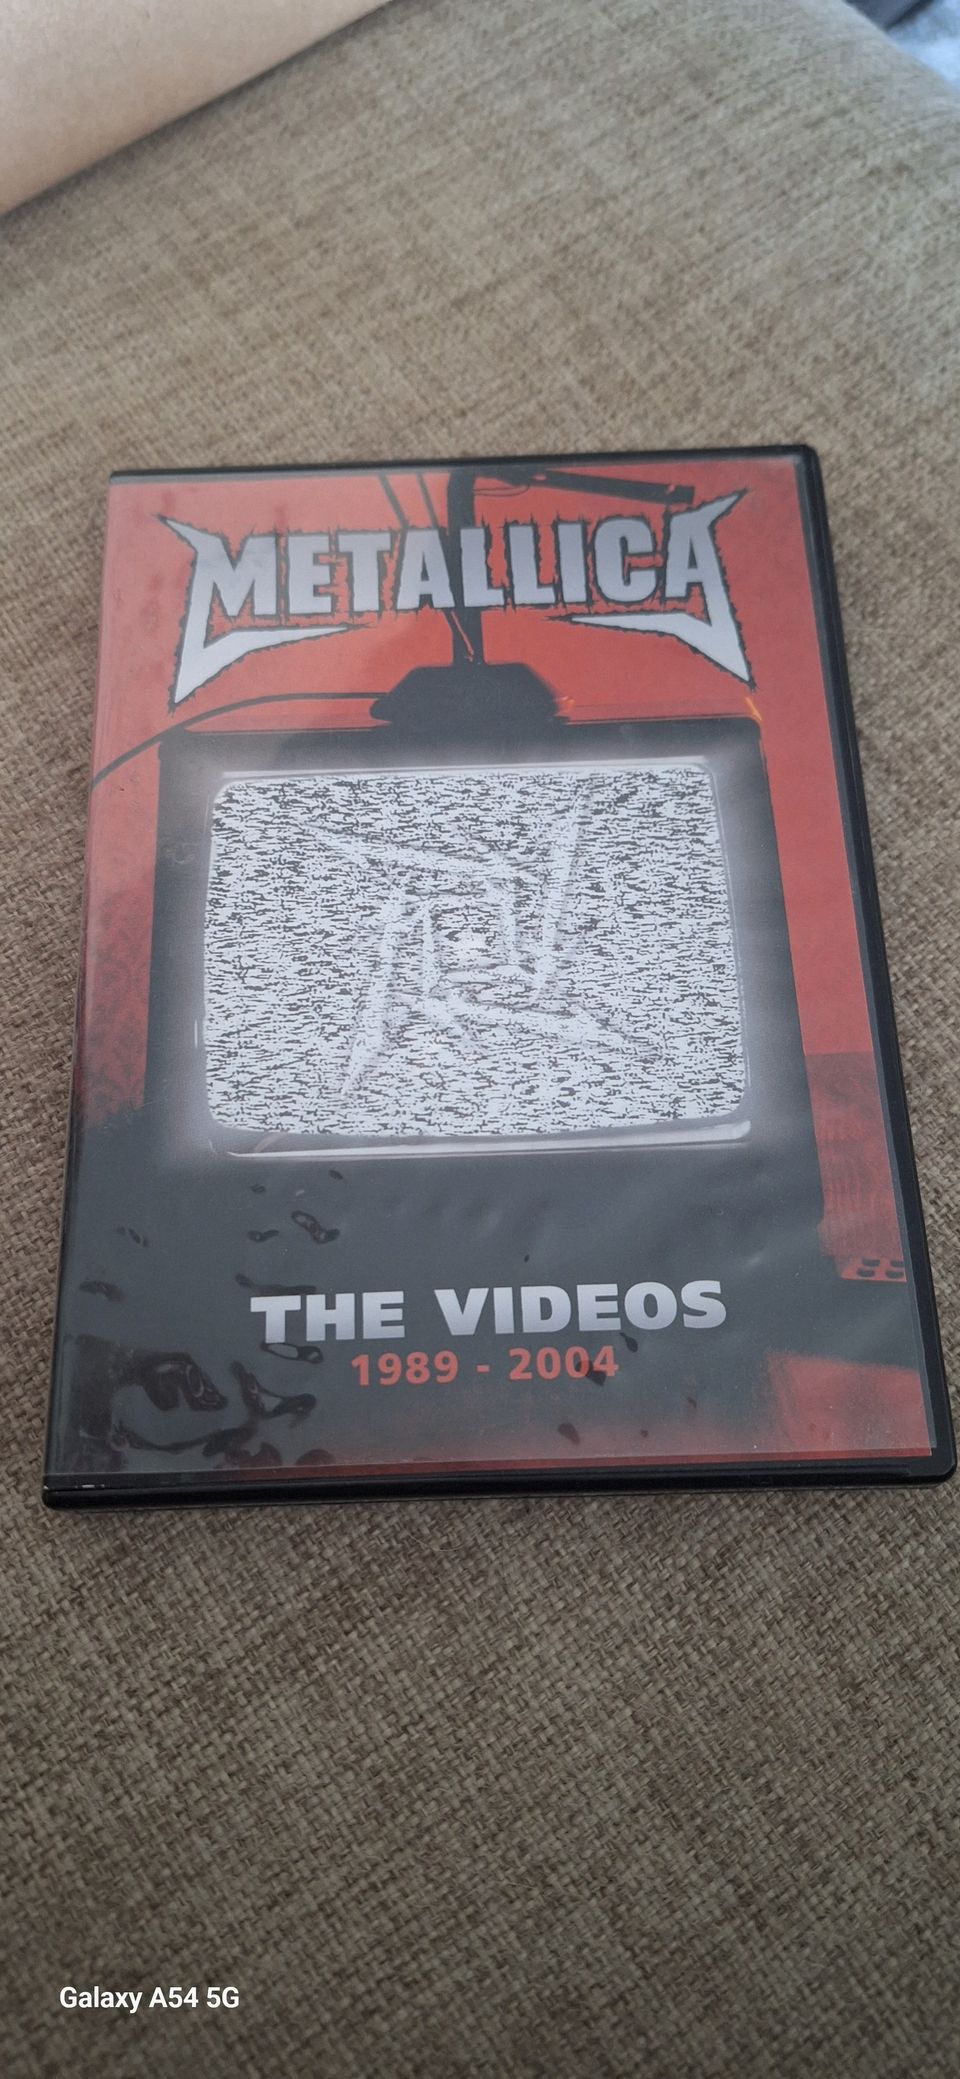 Metallica ☆ The videos 1989 - 2004